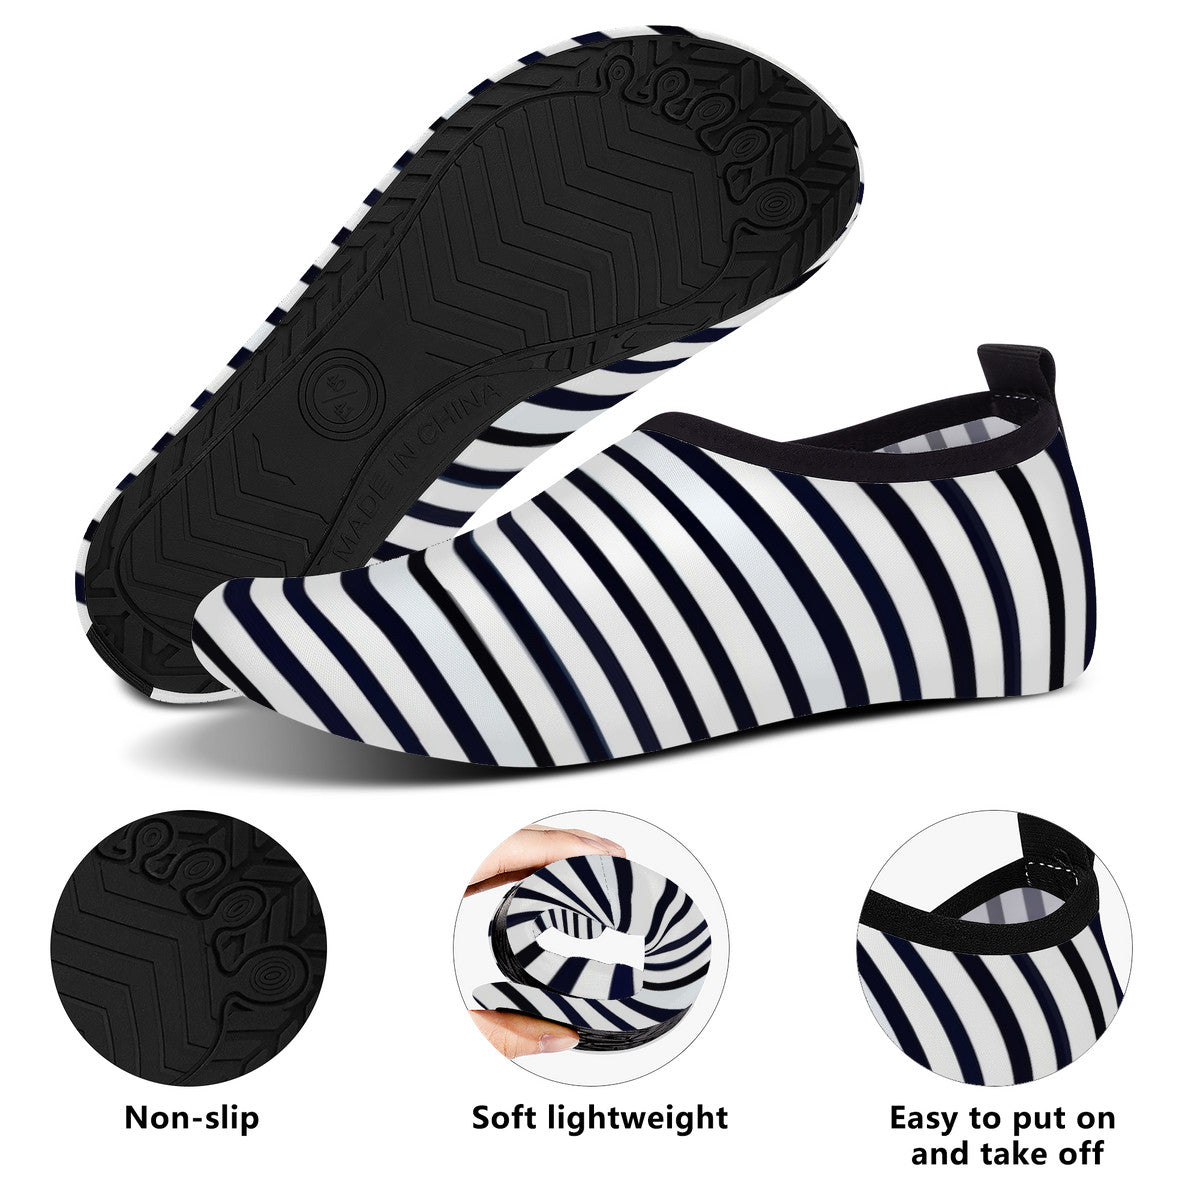 Vampire Art Unisex Water Sports Aqua Shoes - Retro Breton Black and White Stripes